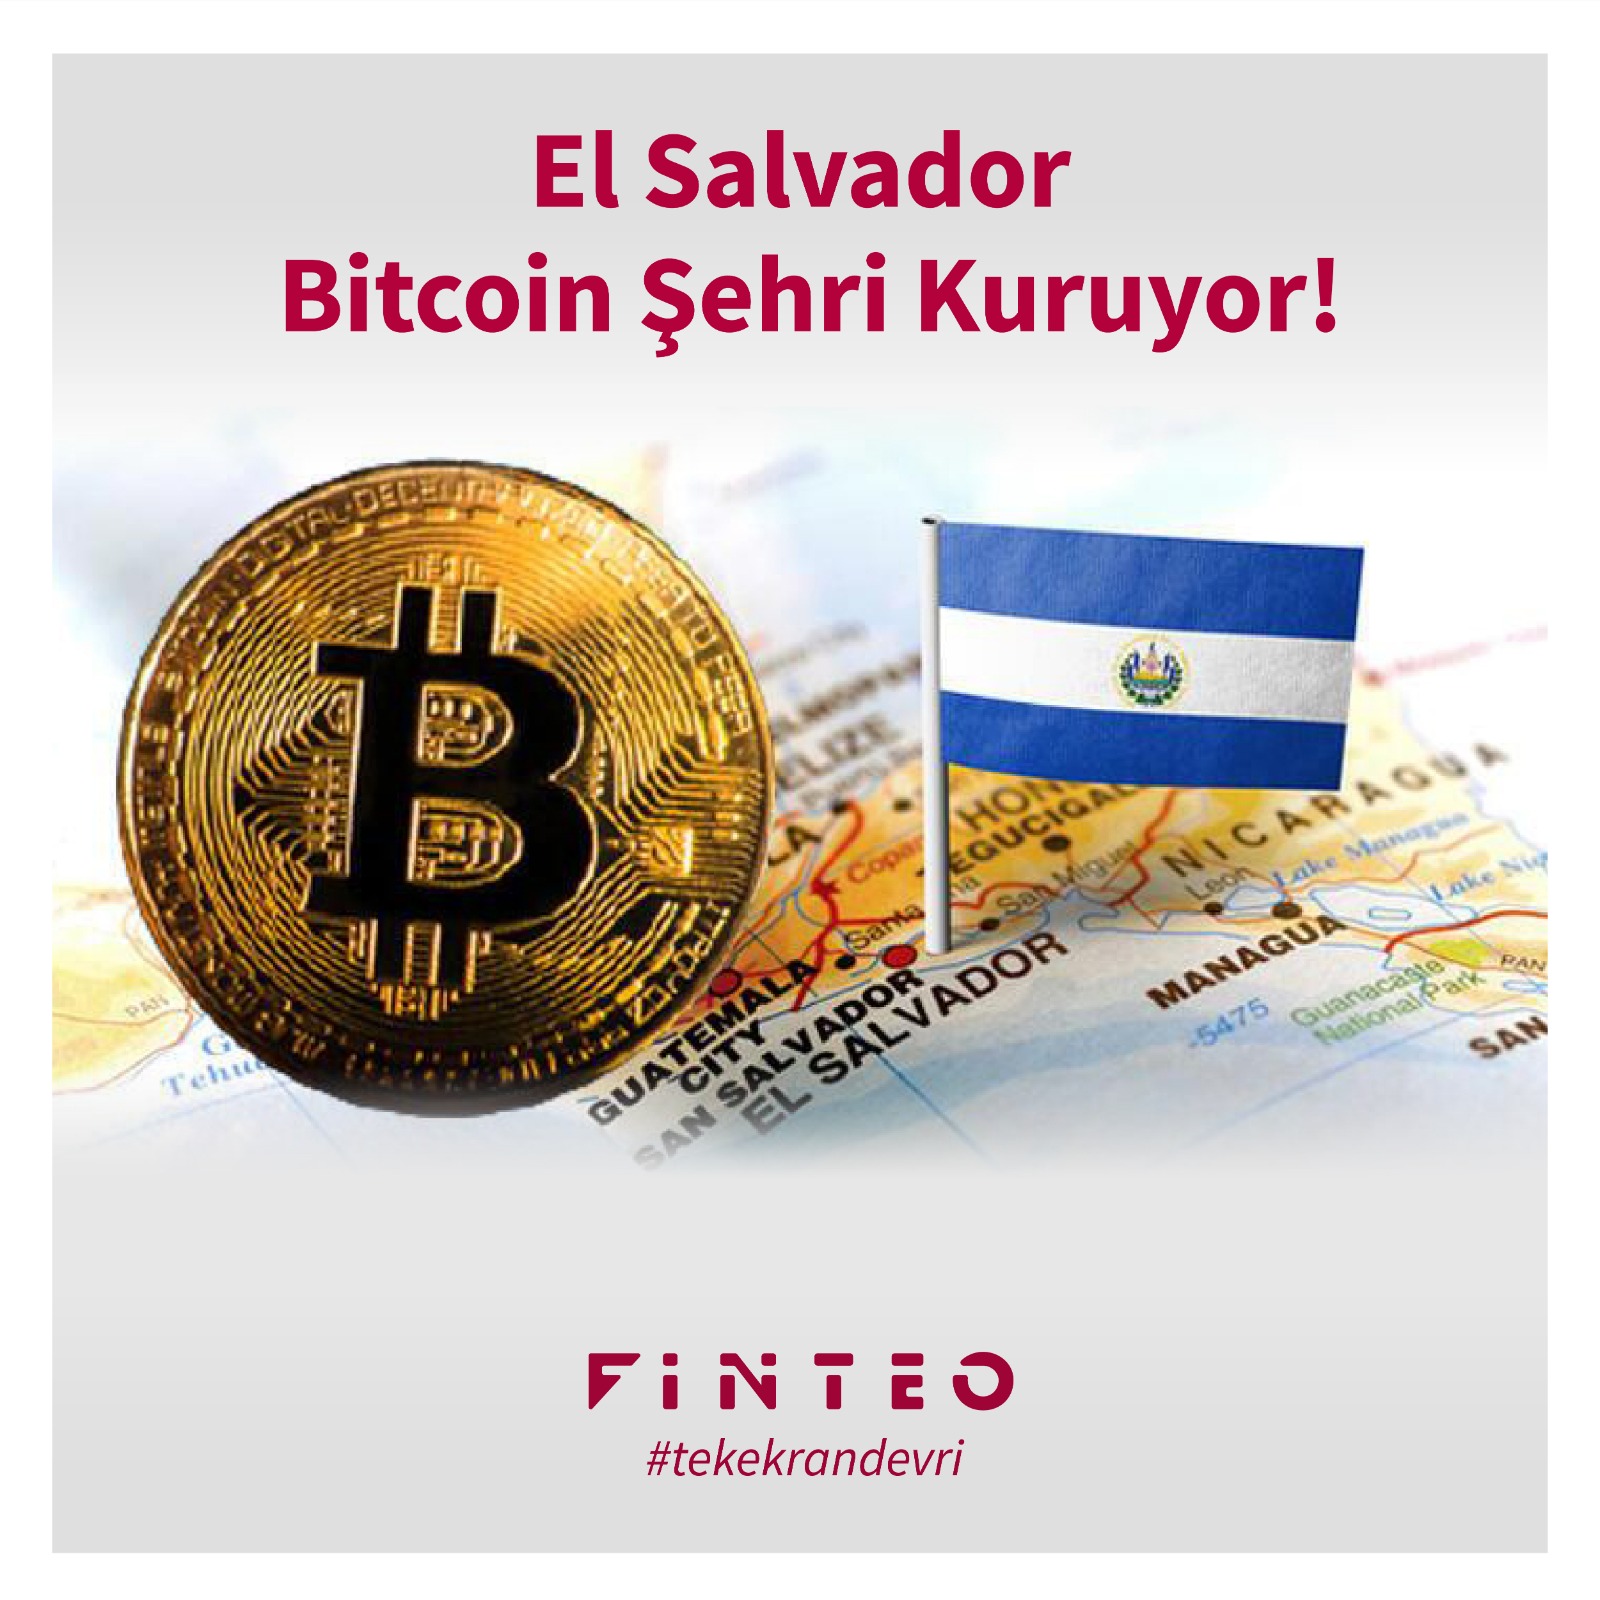 El Salvador Bitcoin Şehri Kuruyor